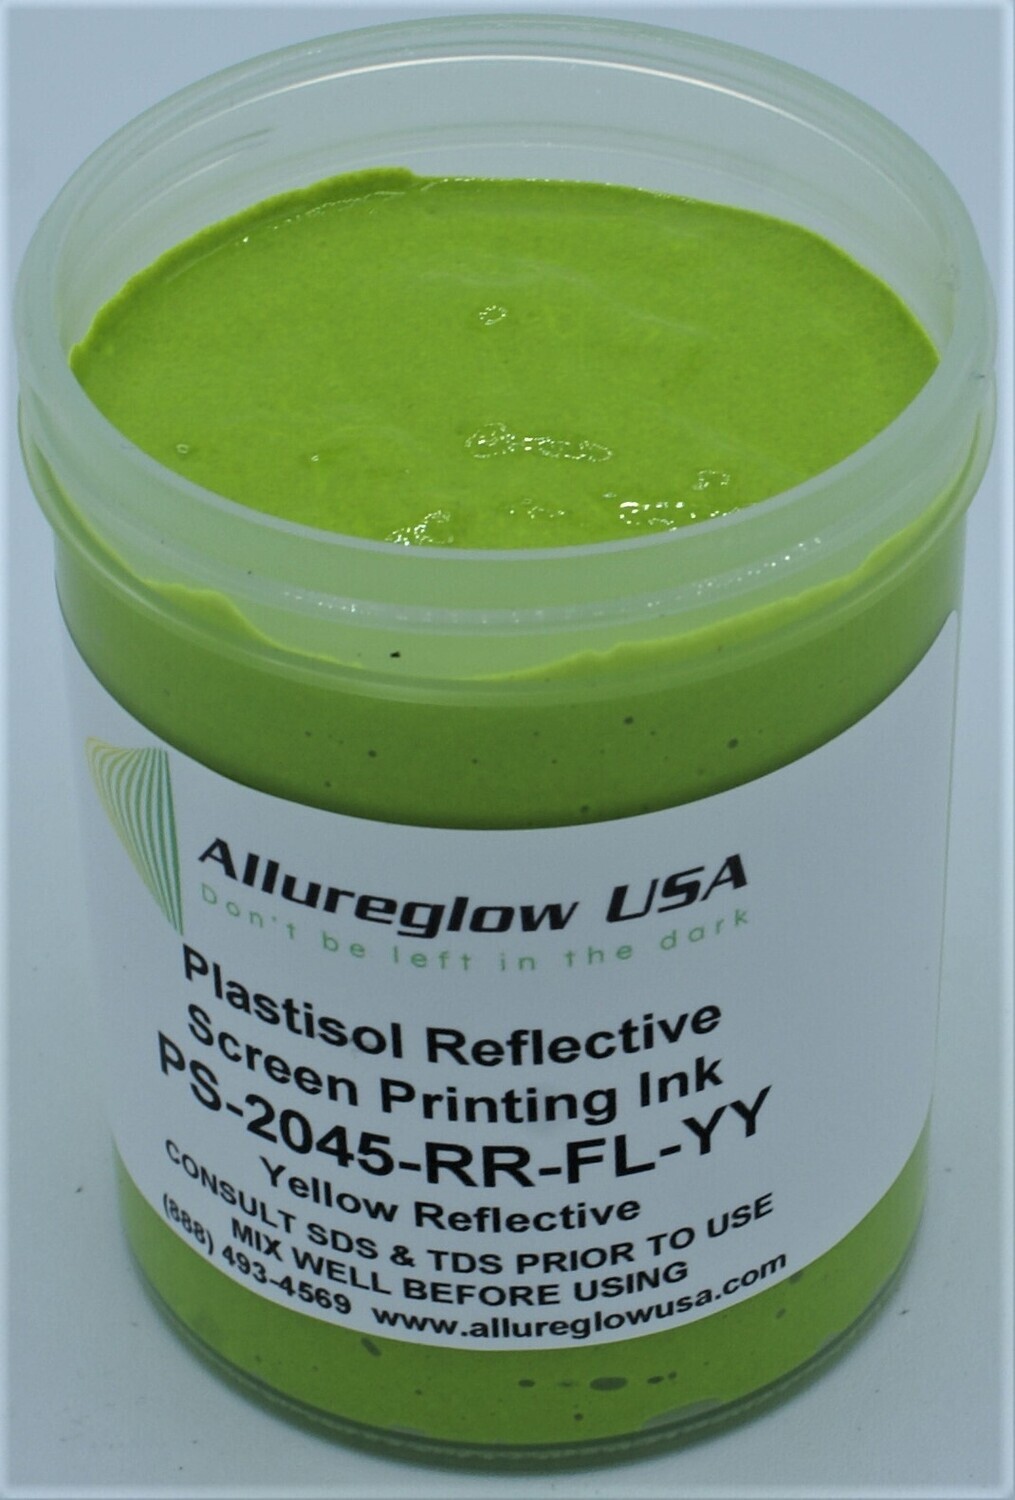 PS-2045-RR-FL-YY-FV  PLASTISOL FLUORESCENT YELLOW REFLECTIVE INK 5 GALLON